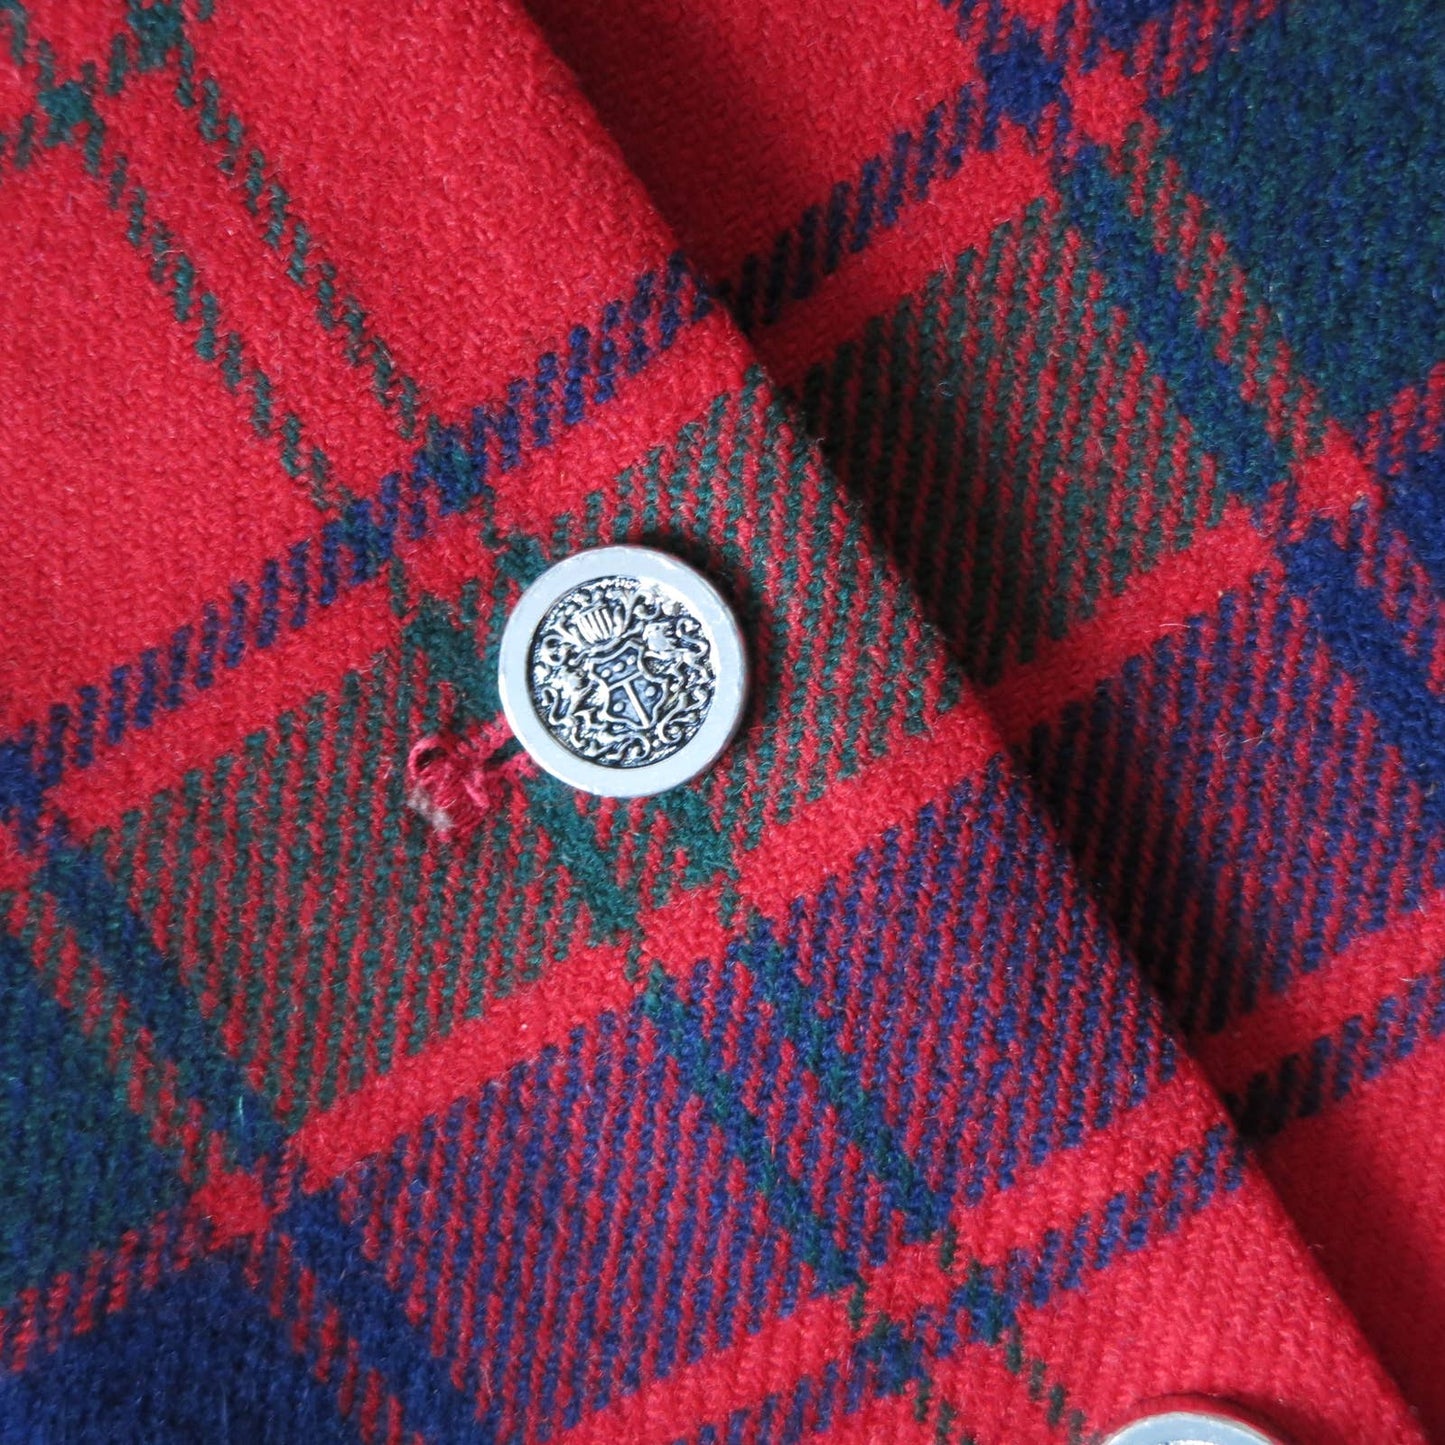 60s Red Plaid Scottish Wool Vest Size M